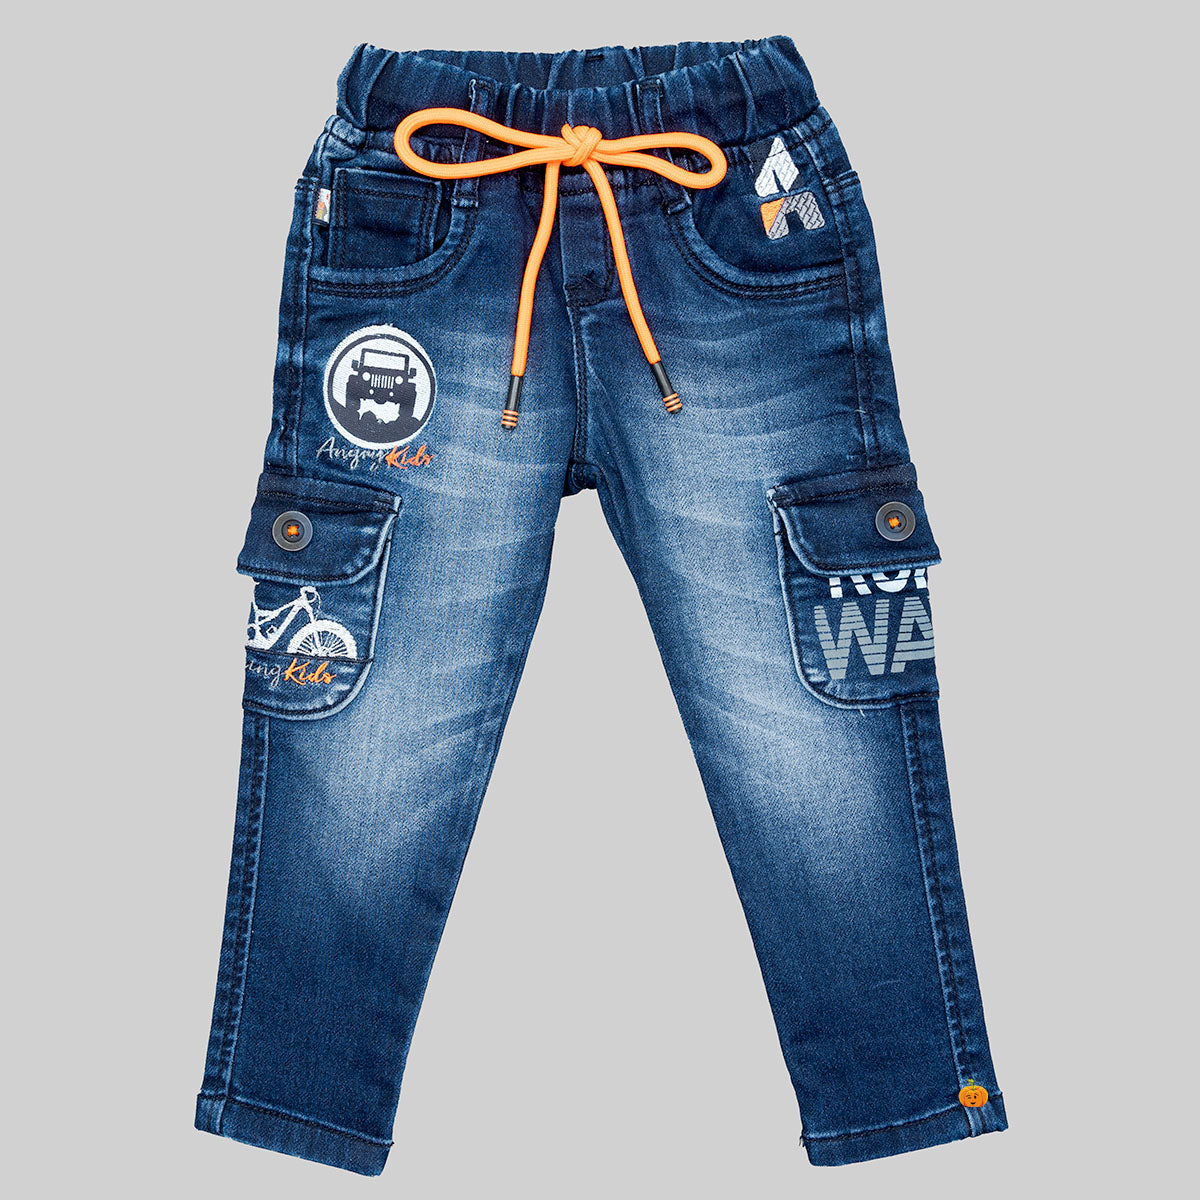 wholesale 4-13 years children fashion jeans| Alibaba.com